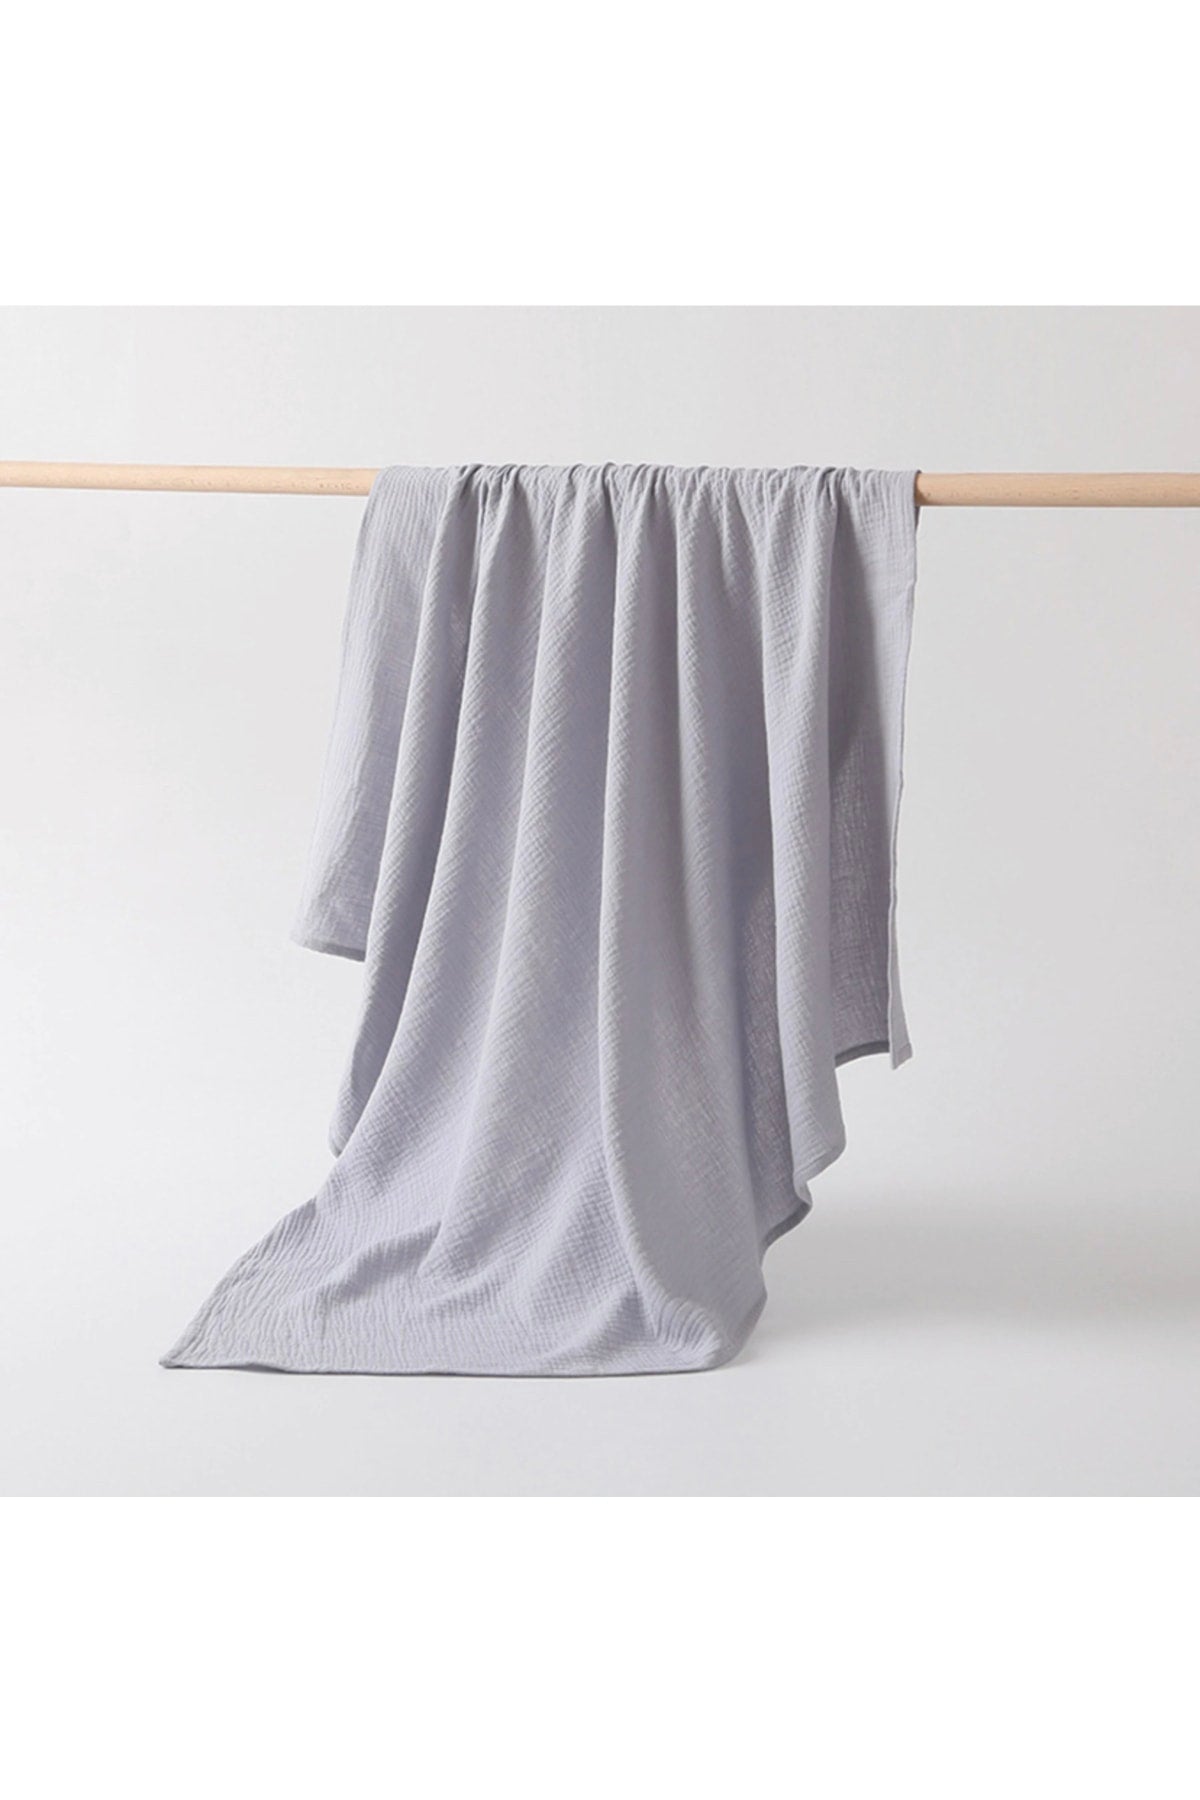 100% Organic Cotton Muslin Baby Blanket Double Layer 3 Piece Baby Blanket (80-80cm